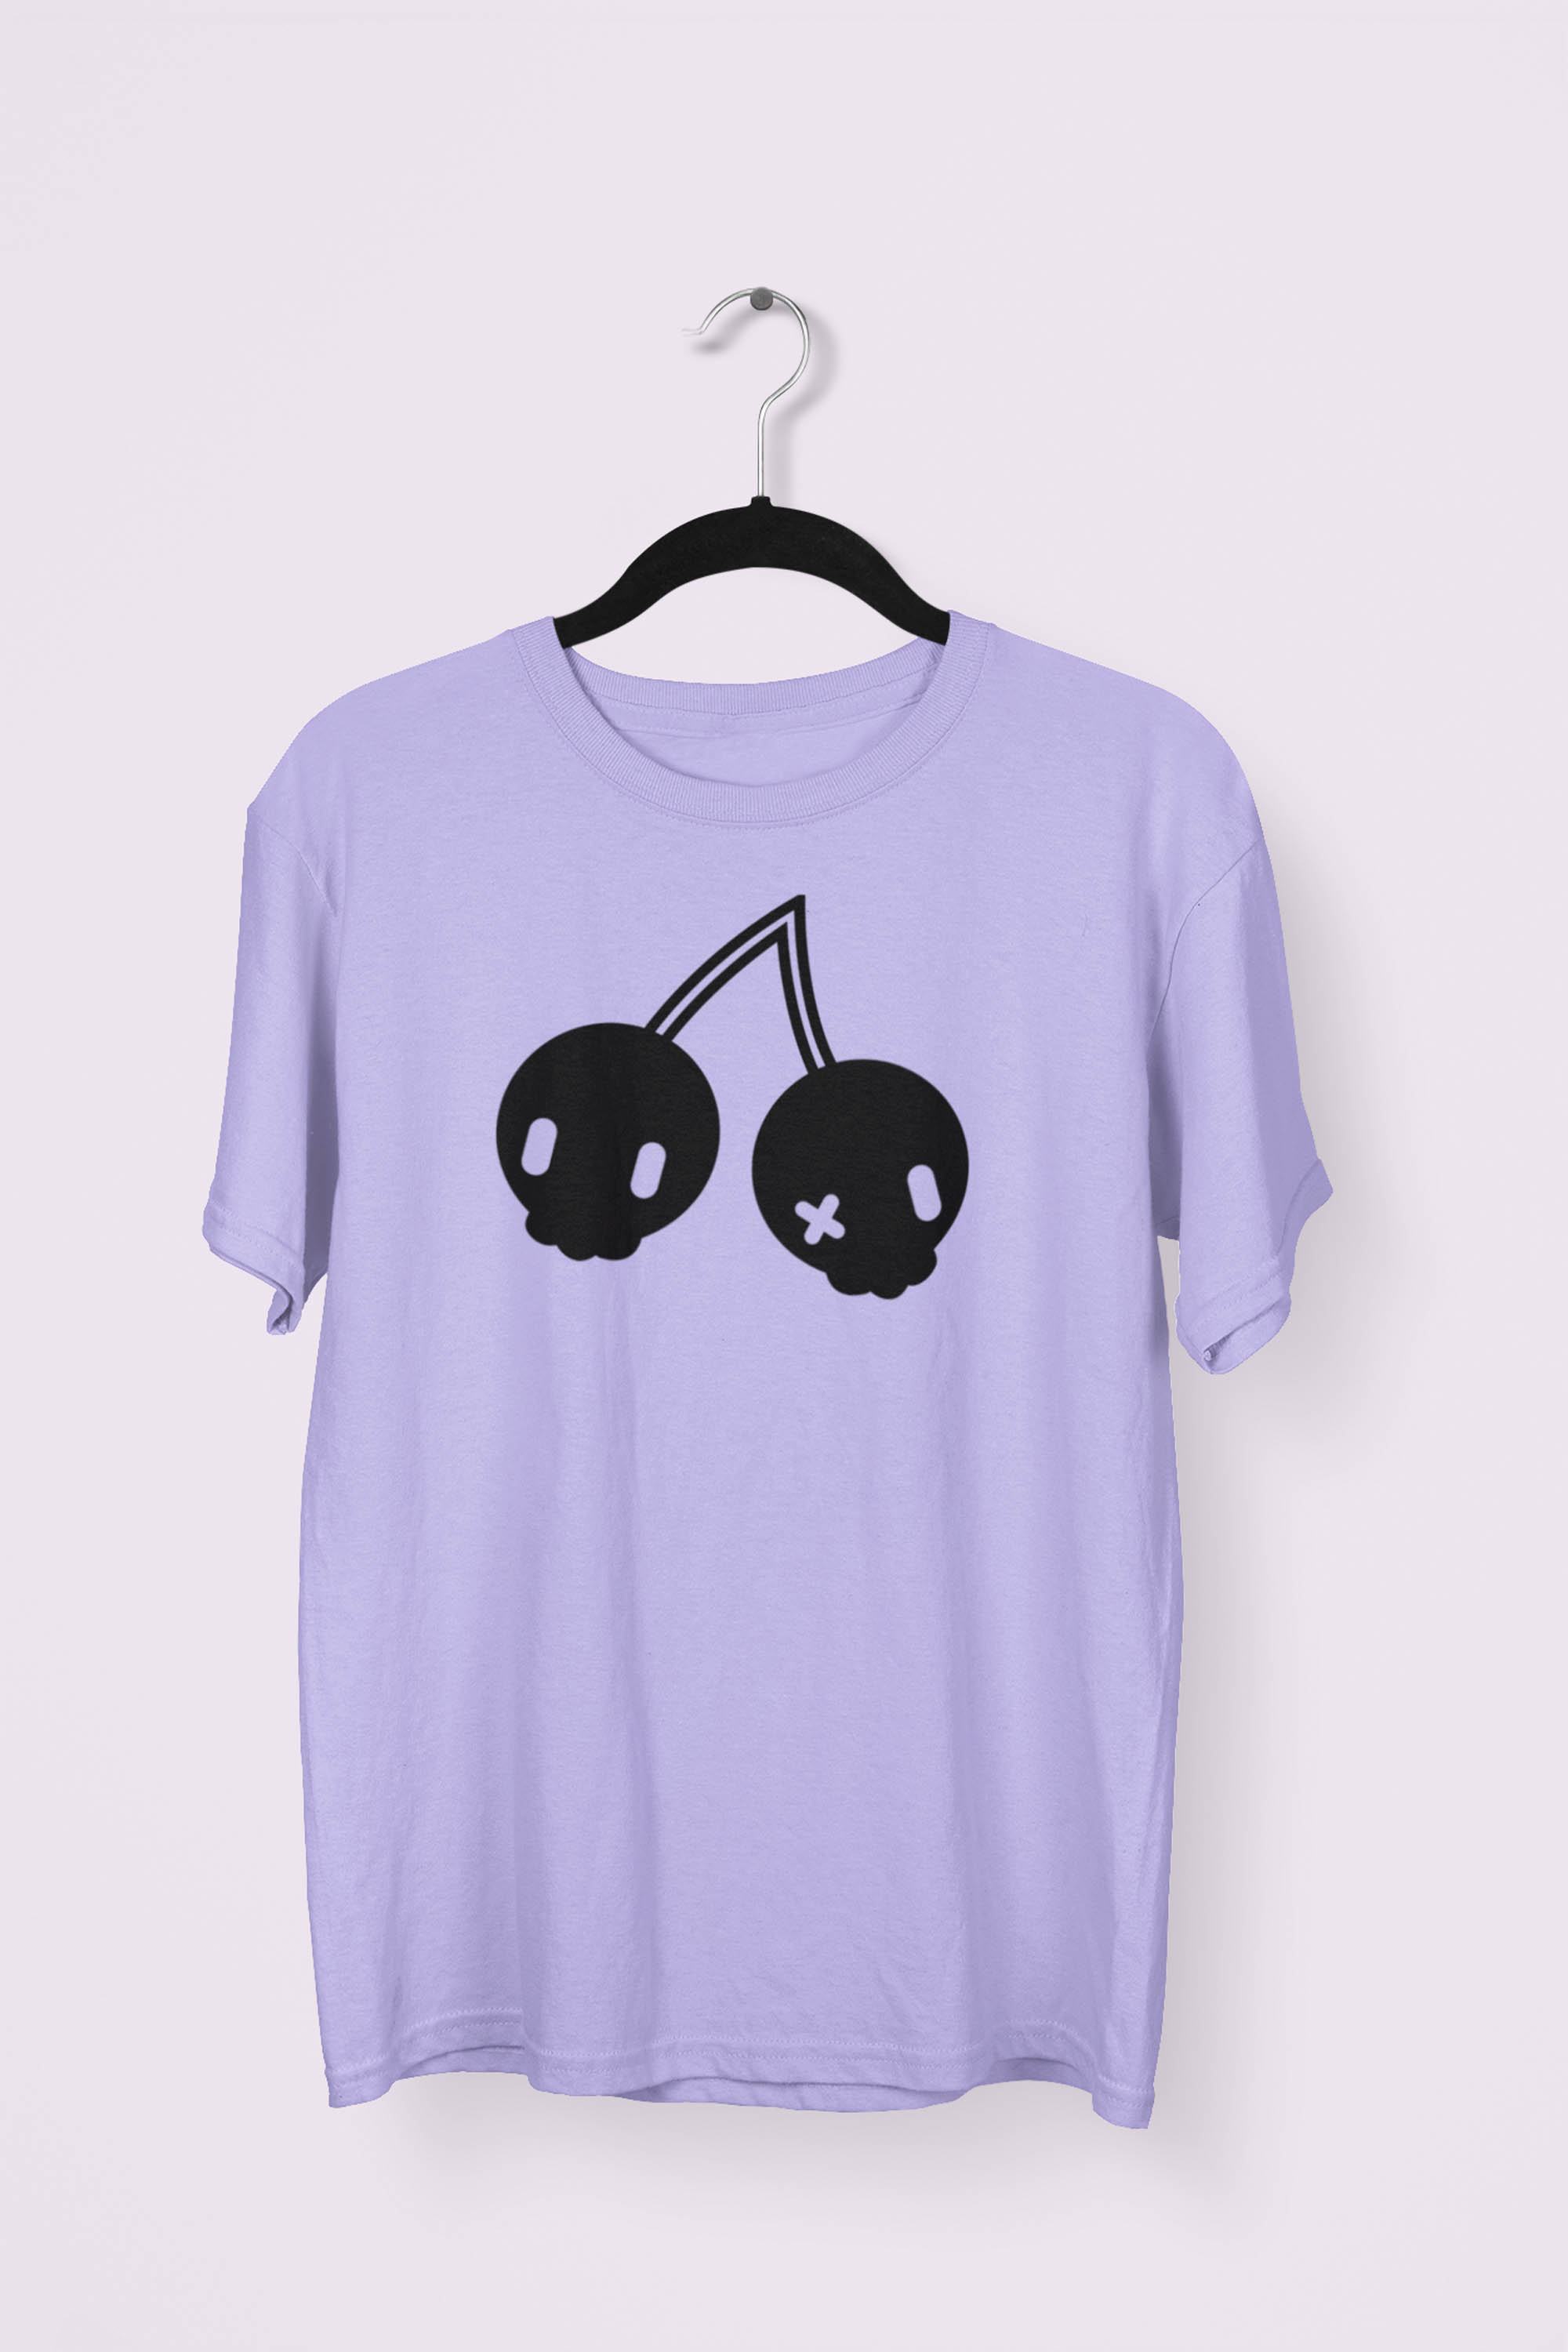 Cherry Skulls T-shirt by Dokkirii - Violet